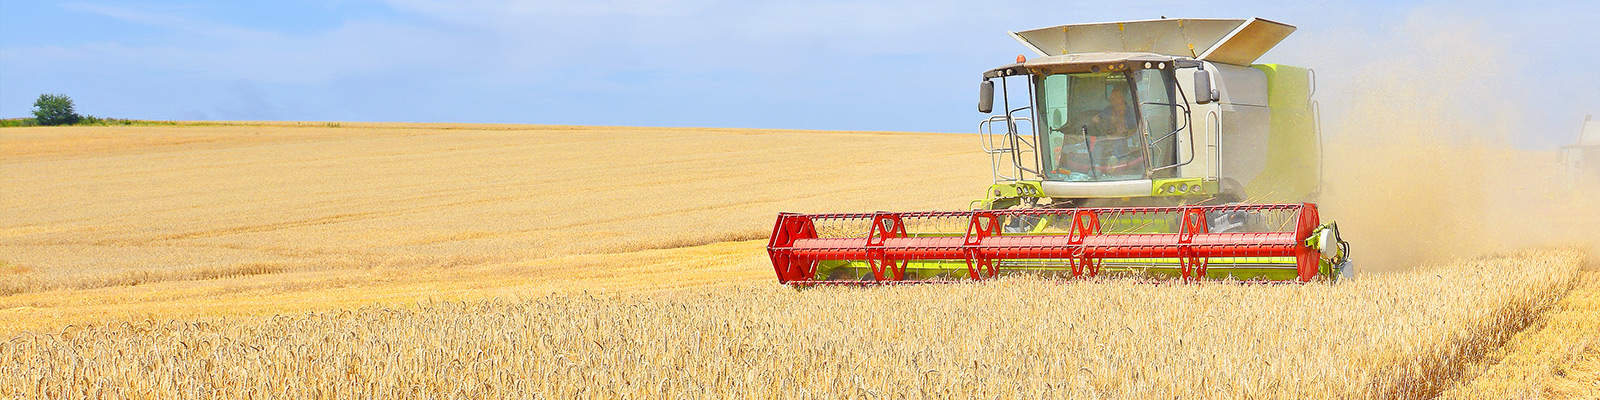 A combine harvester gathering grain